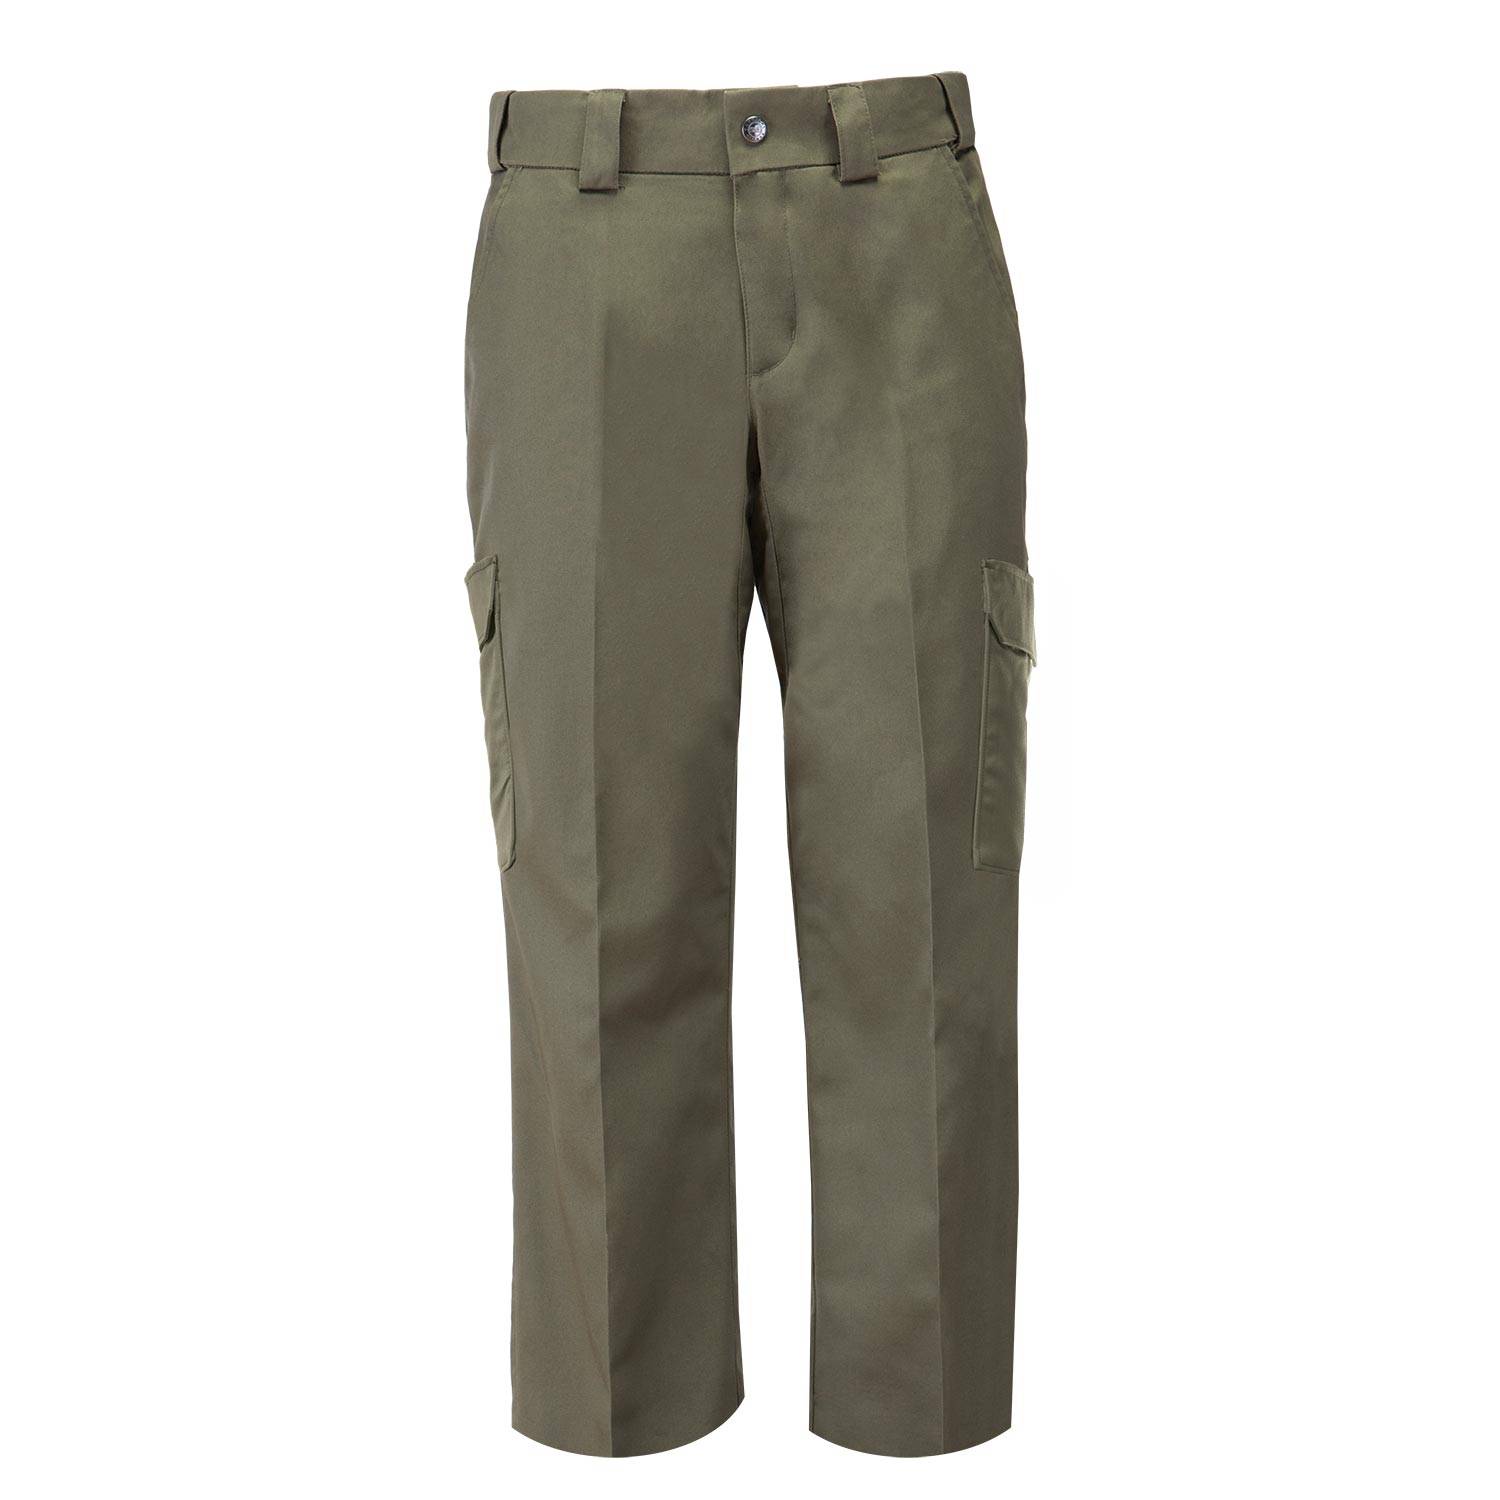 5.11 Tactical Women's PDU Pants